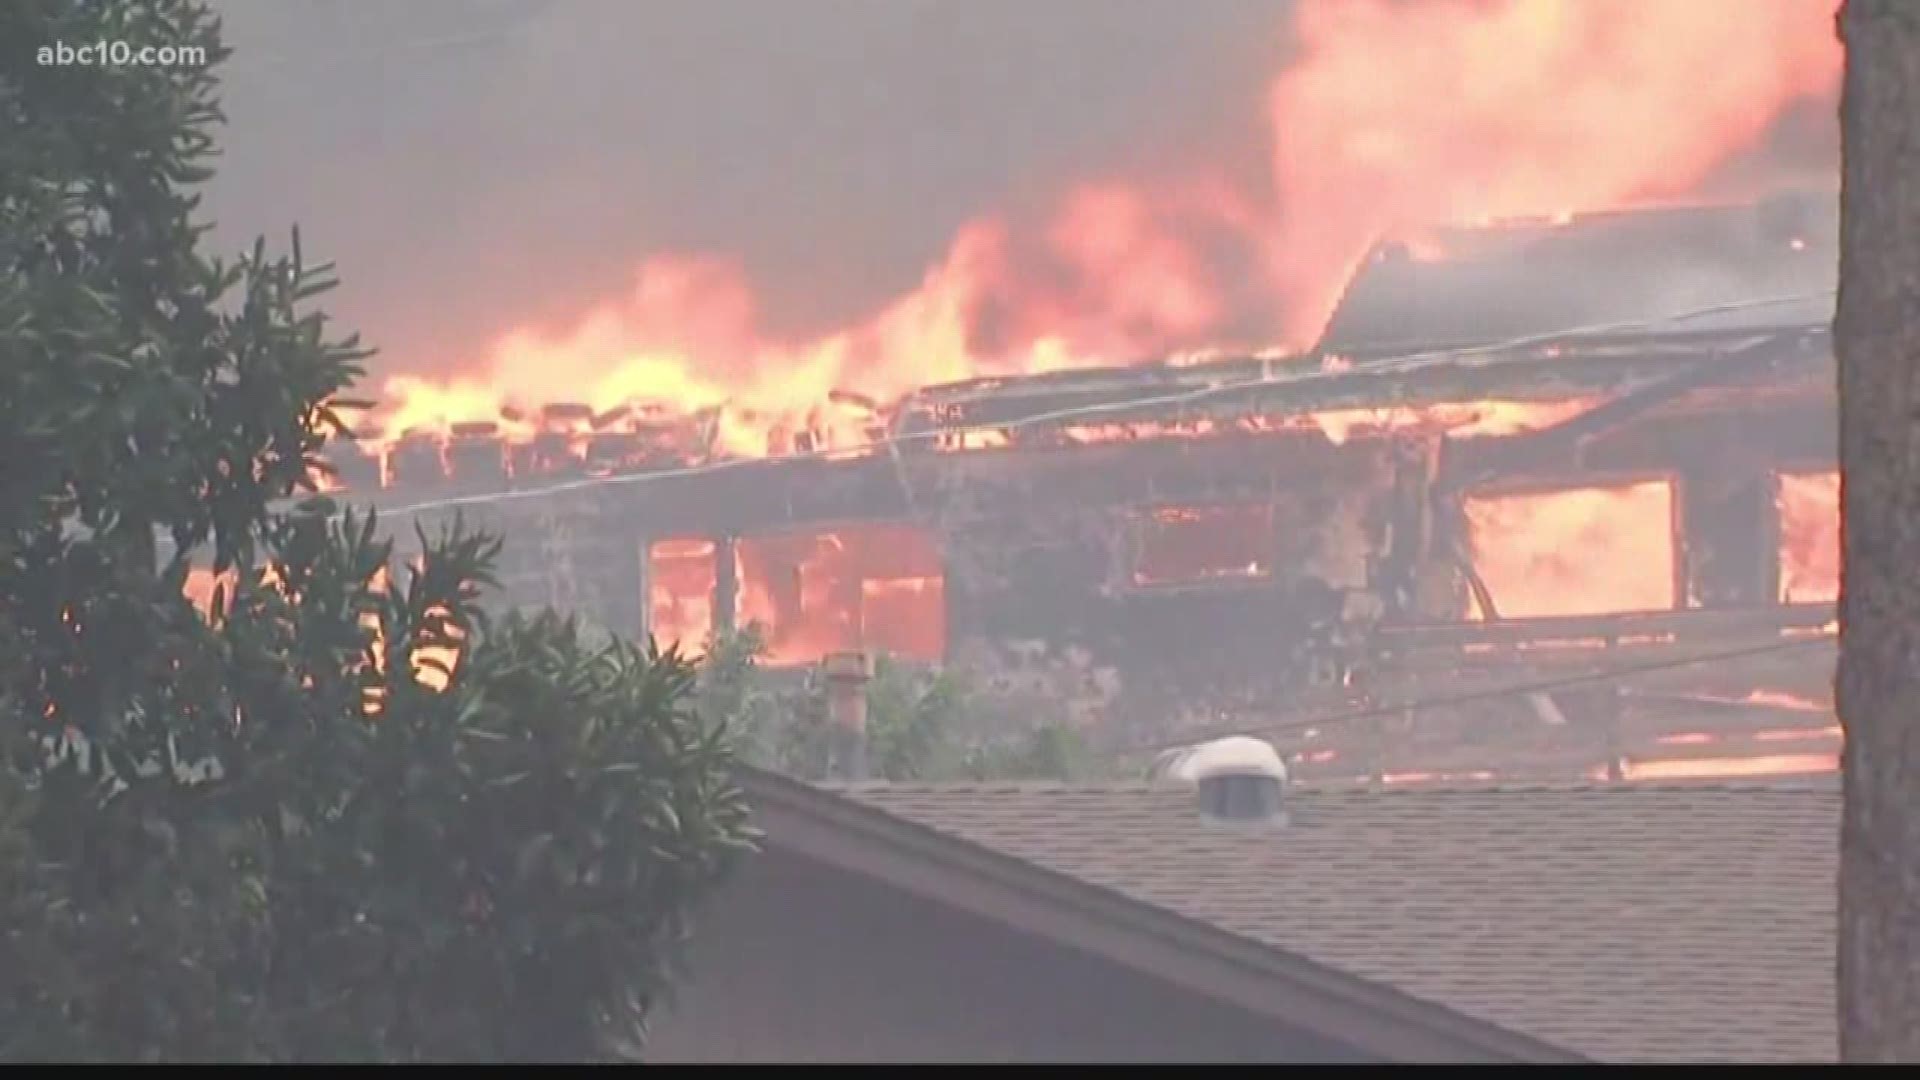 Walt Gray has the latest on the fires burning across California.